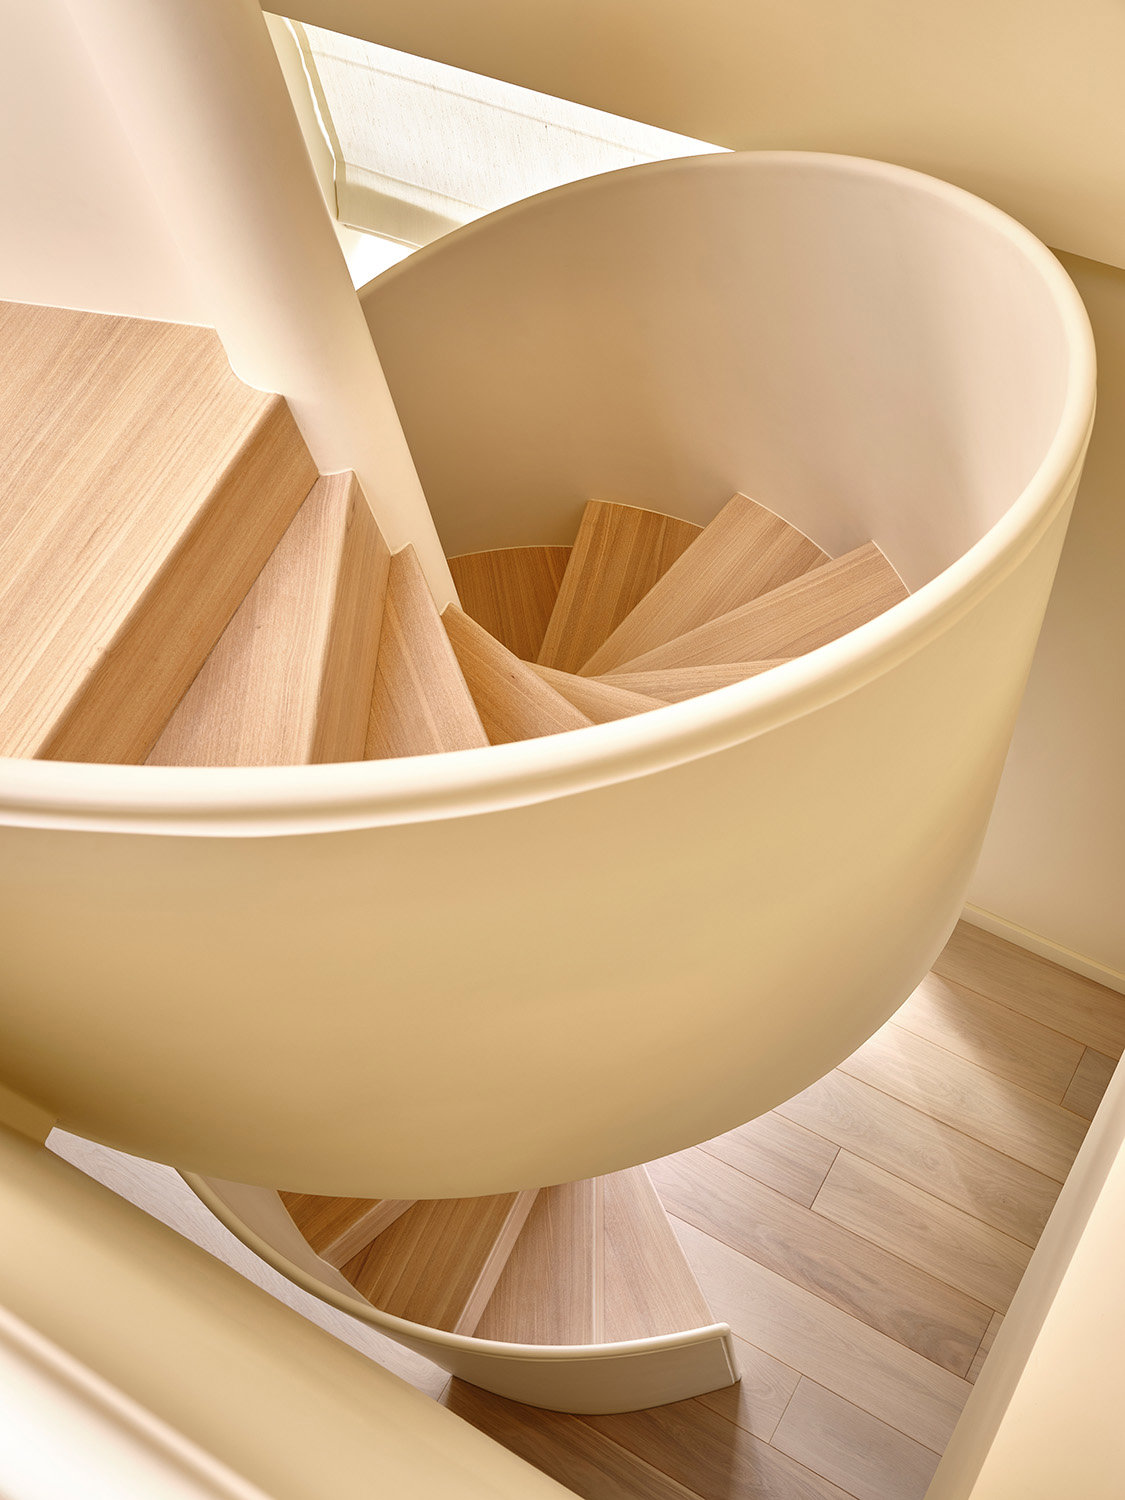 Escalera de espiral minimalista con tonos neutros